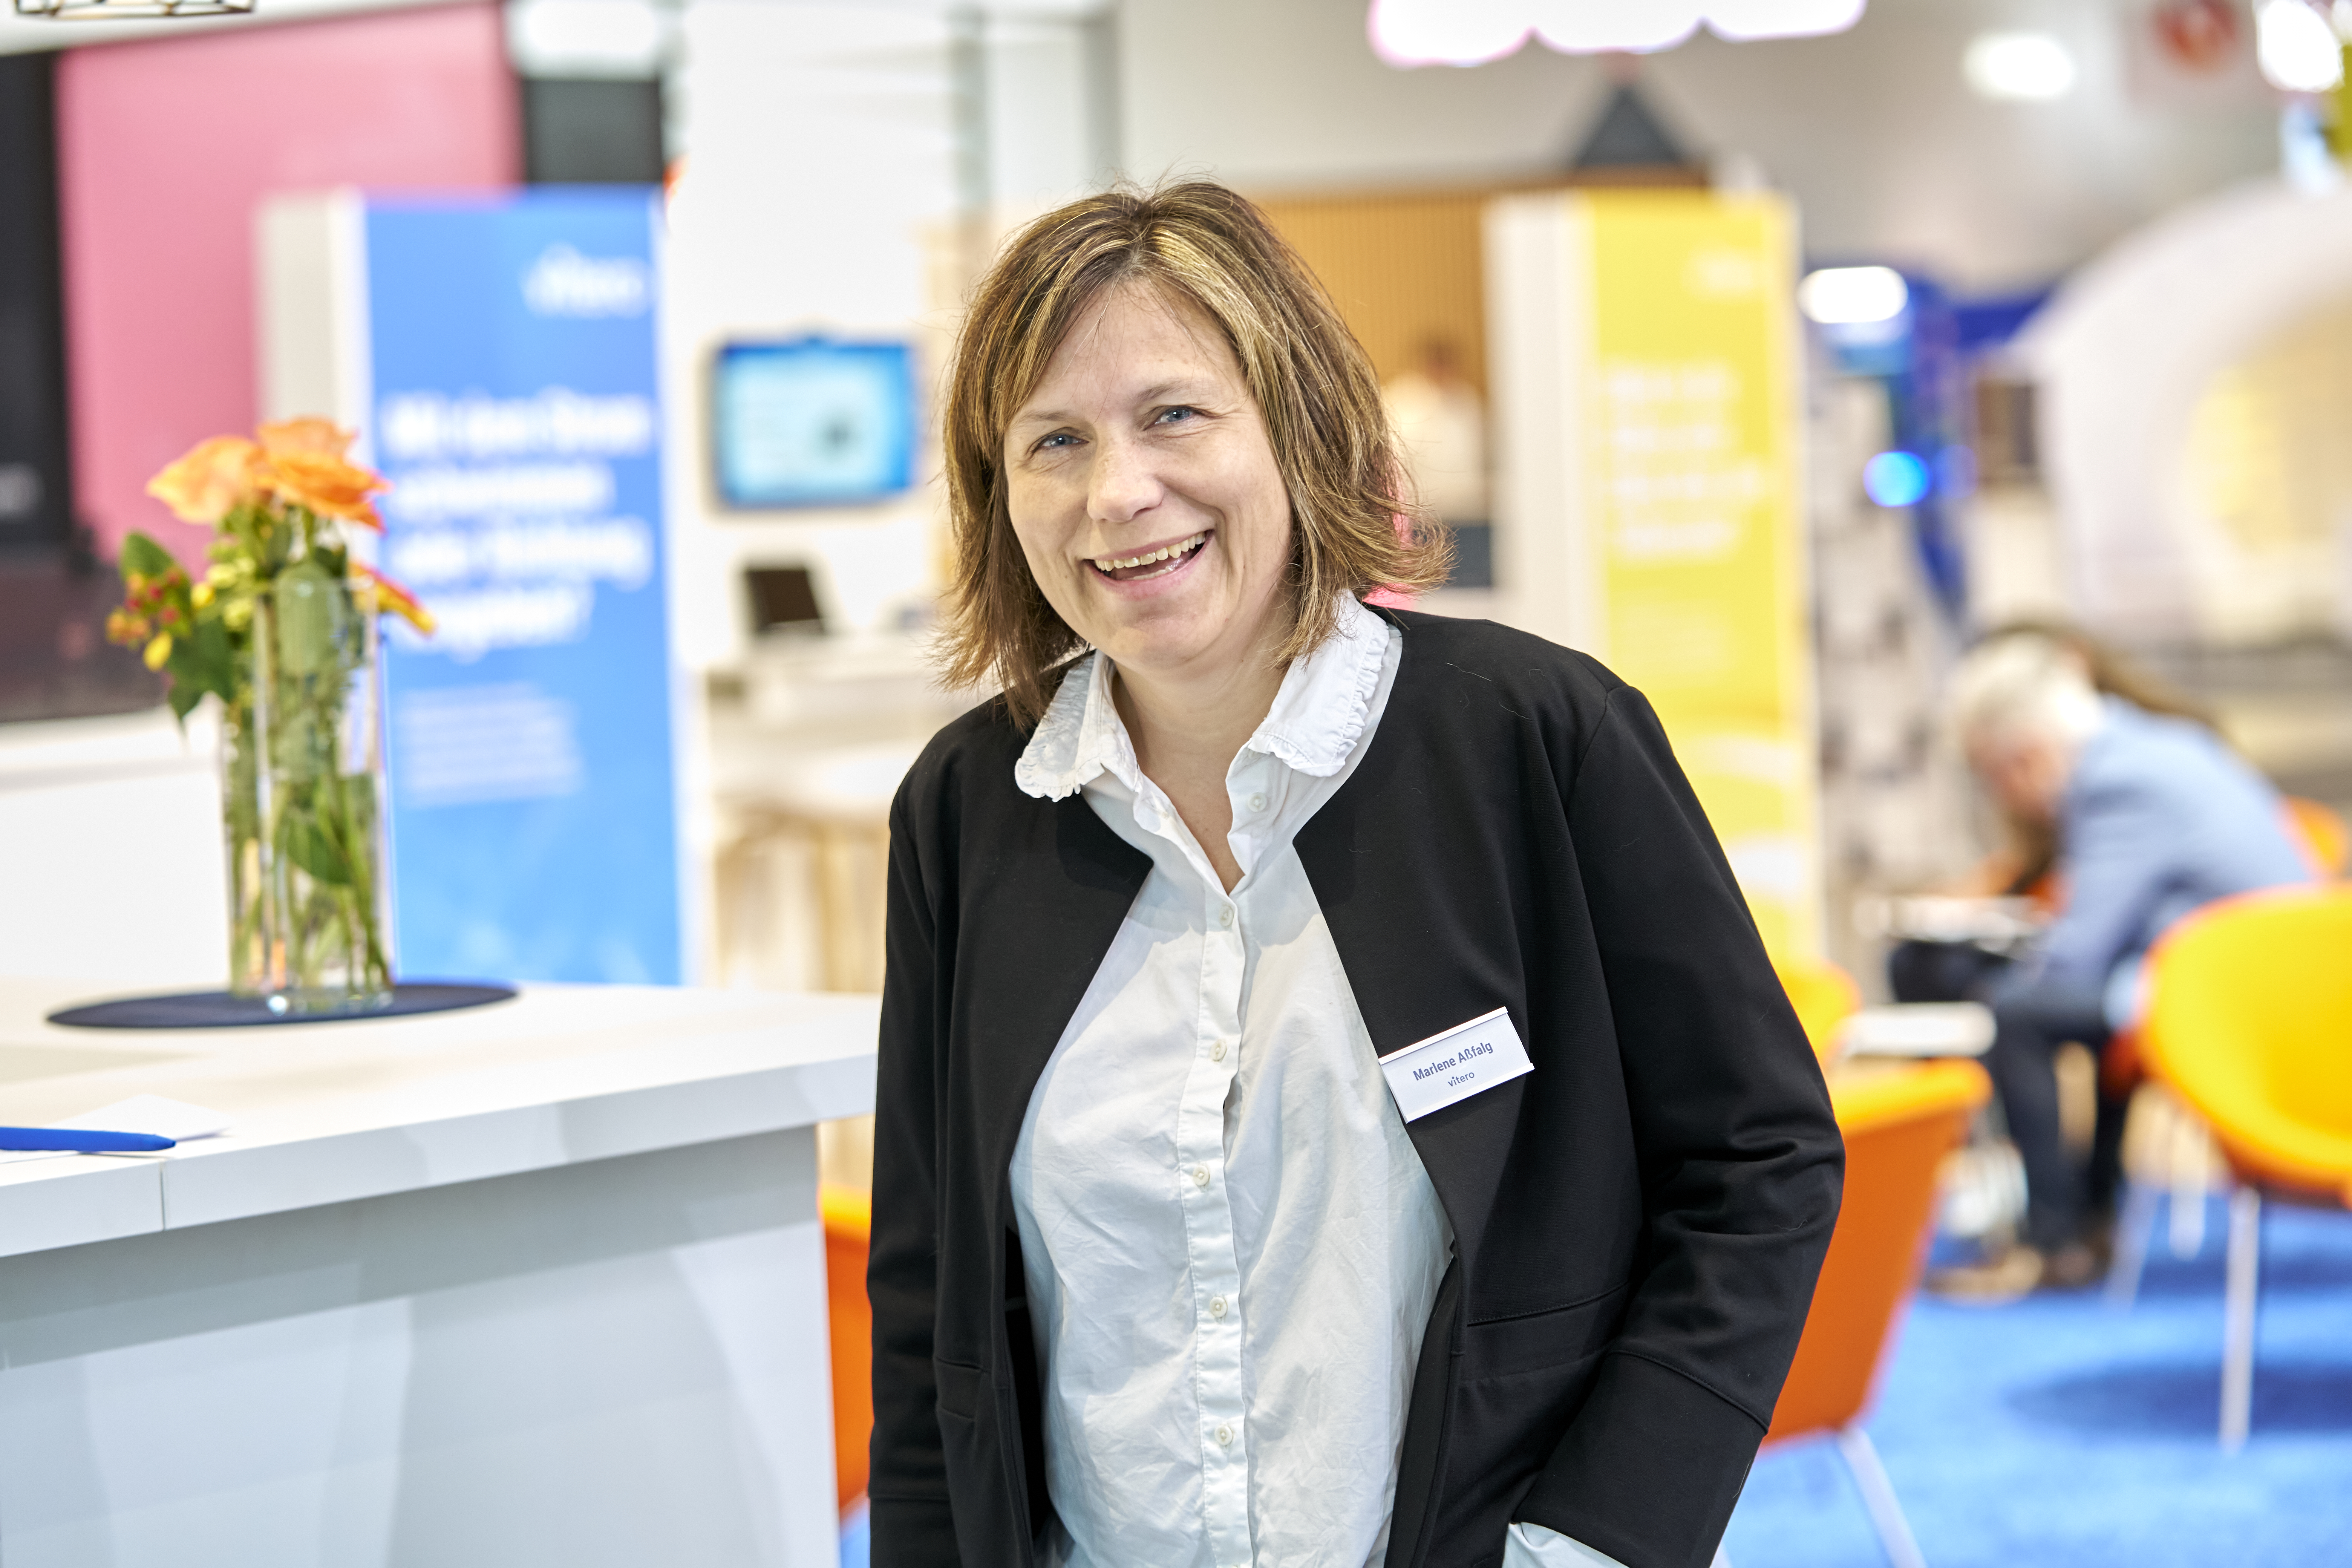  Marlene Aßfalg, Head of Marketing bei vitero GmbH 